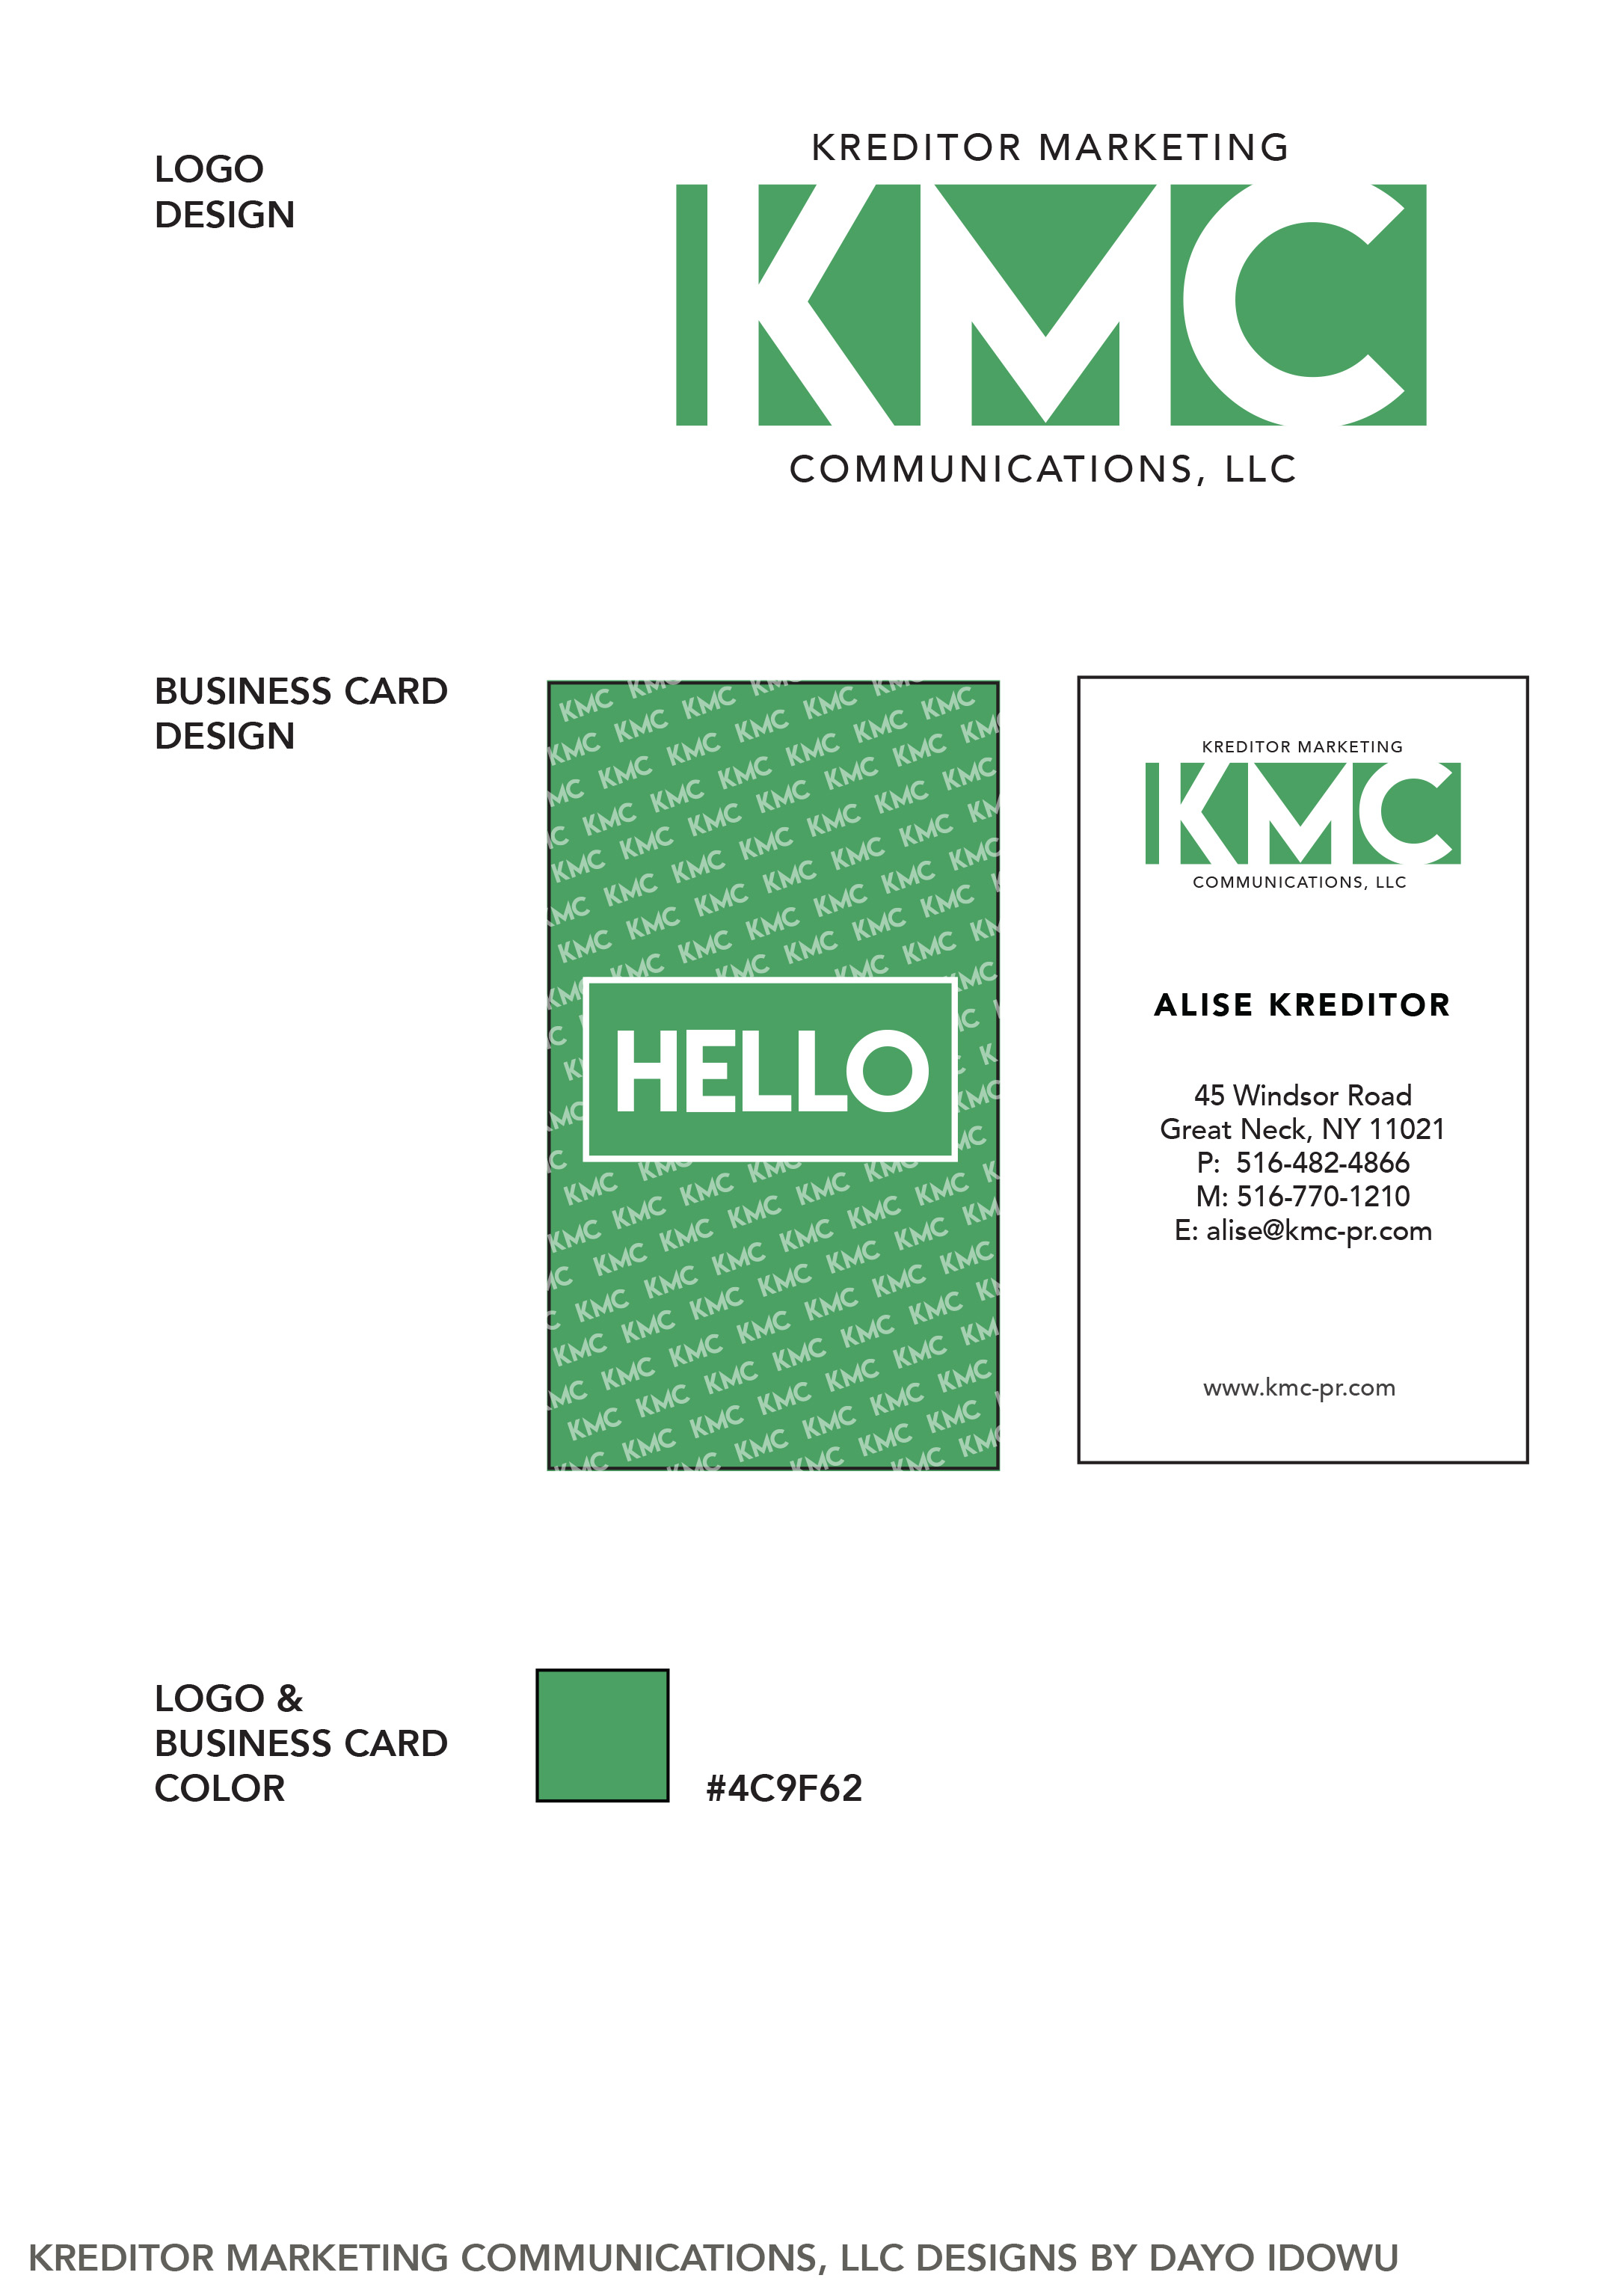 KMC PR Graphic Designs.jpg